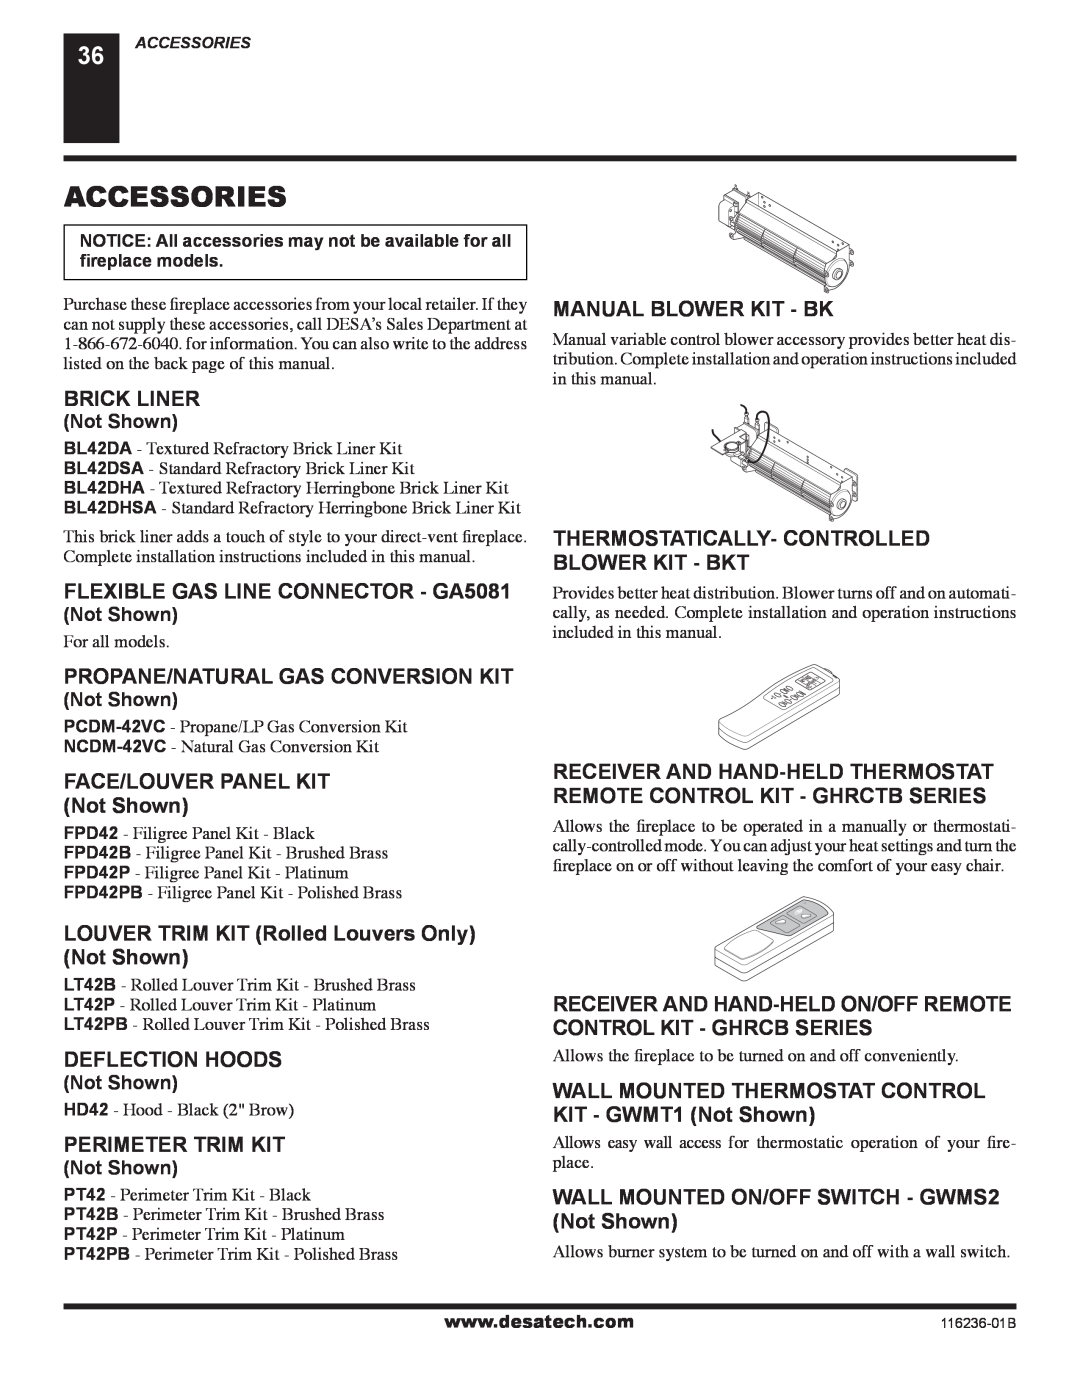 Desa (V)VC42P SERIES Accessories, Brick Liner, FLEXIBLE GAS LINE CONNECTOR - GA5081, Manual Blower Kit - Bk 